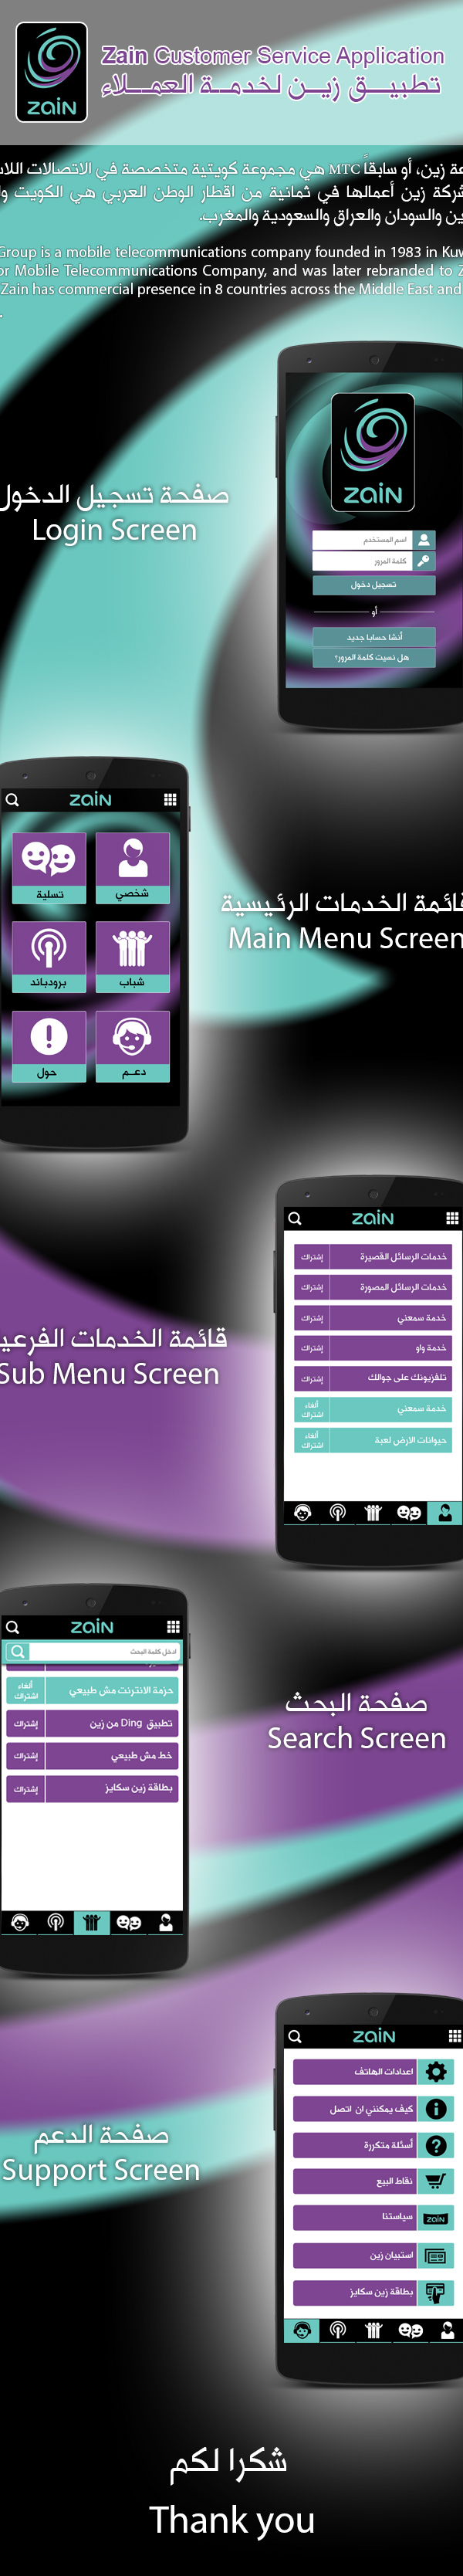 Zain Customer Services android ios